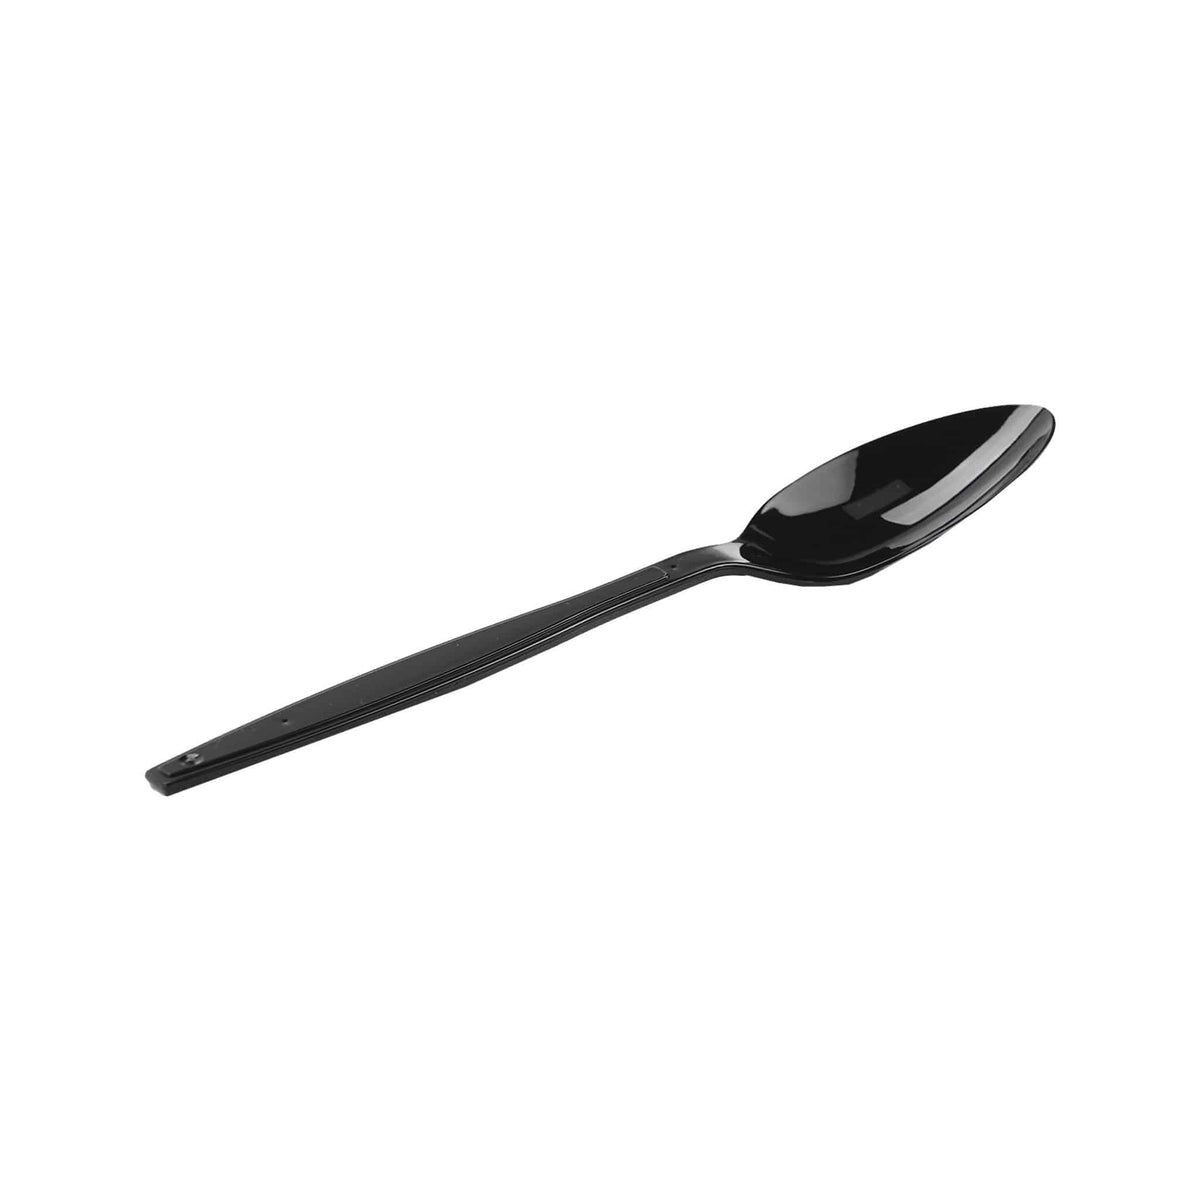 Knork Black Plastic Large Serving Spoon 6 Piece